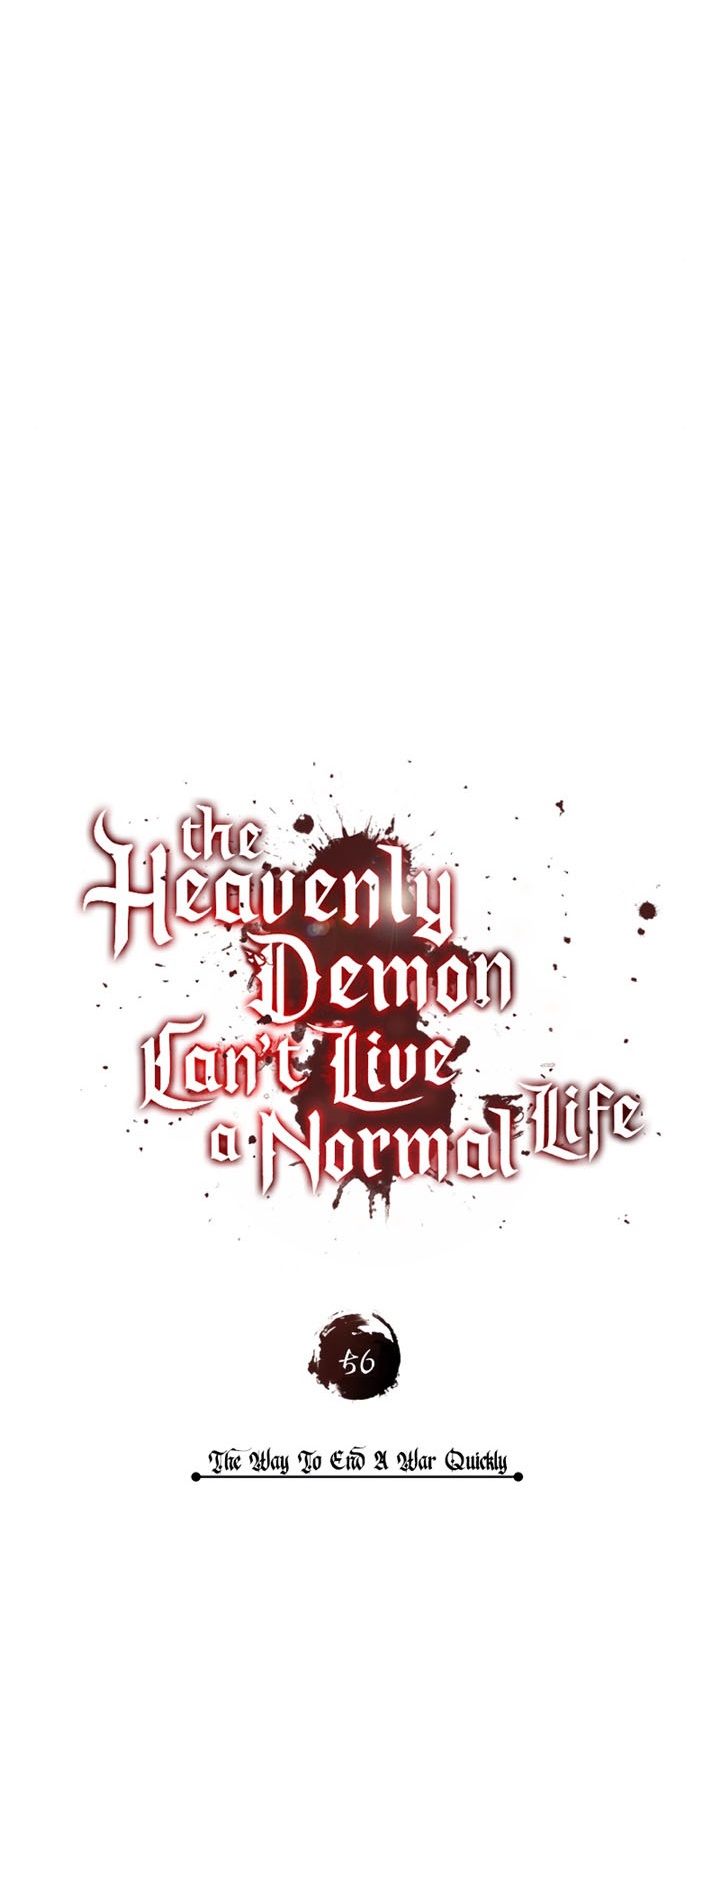 The Heavenly Demon Canโ€t Live a Normal Life 56 (9)